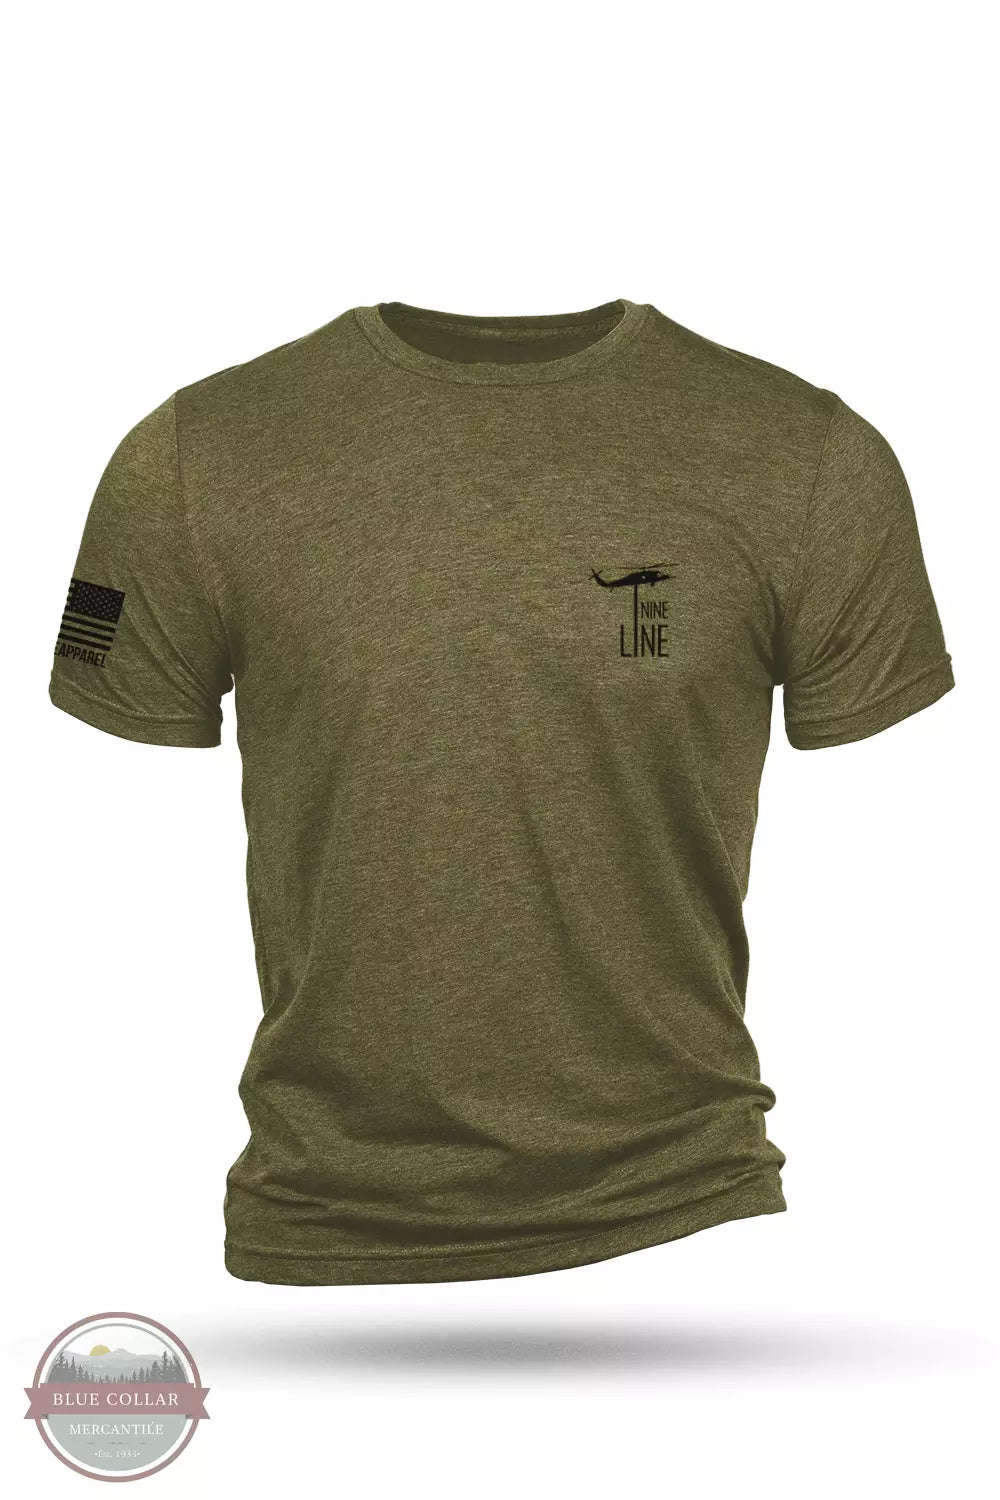 Nine Line AMERICA-TSTRI America Tri-Blend Short Sleeve T-Shirt Olive Front View